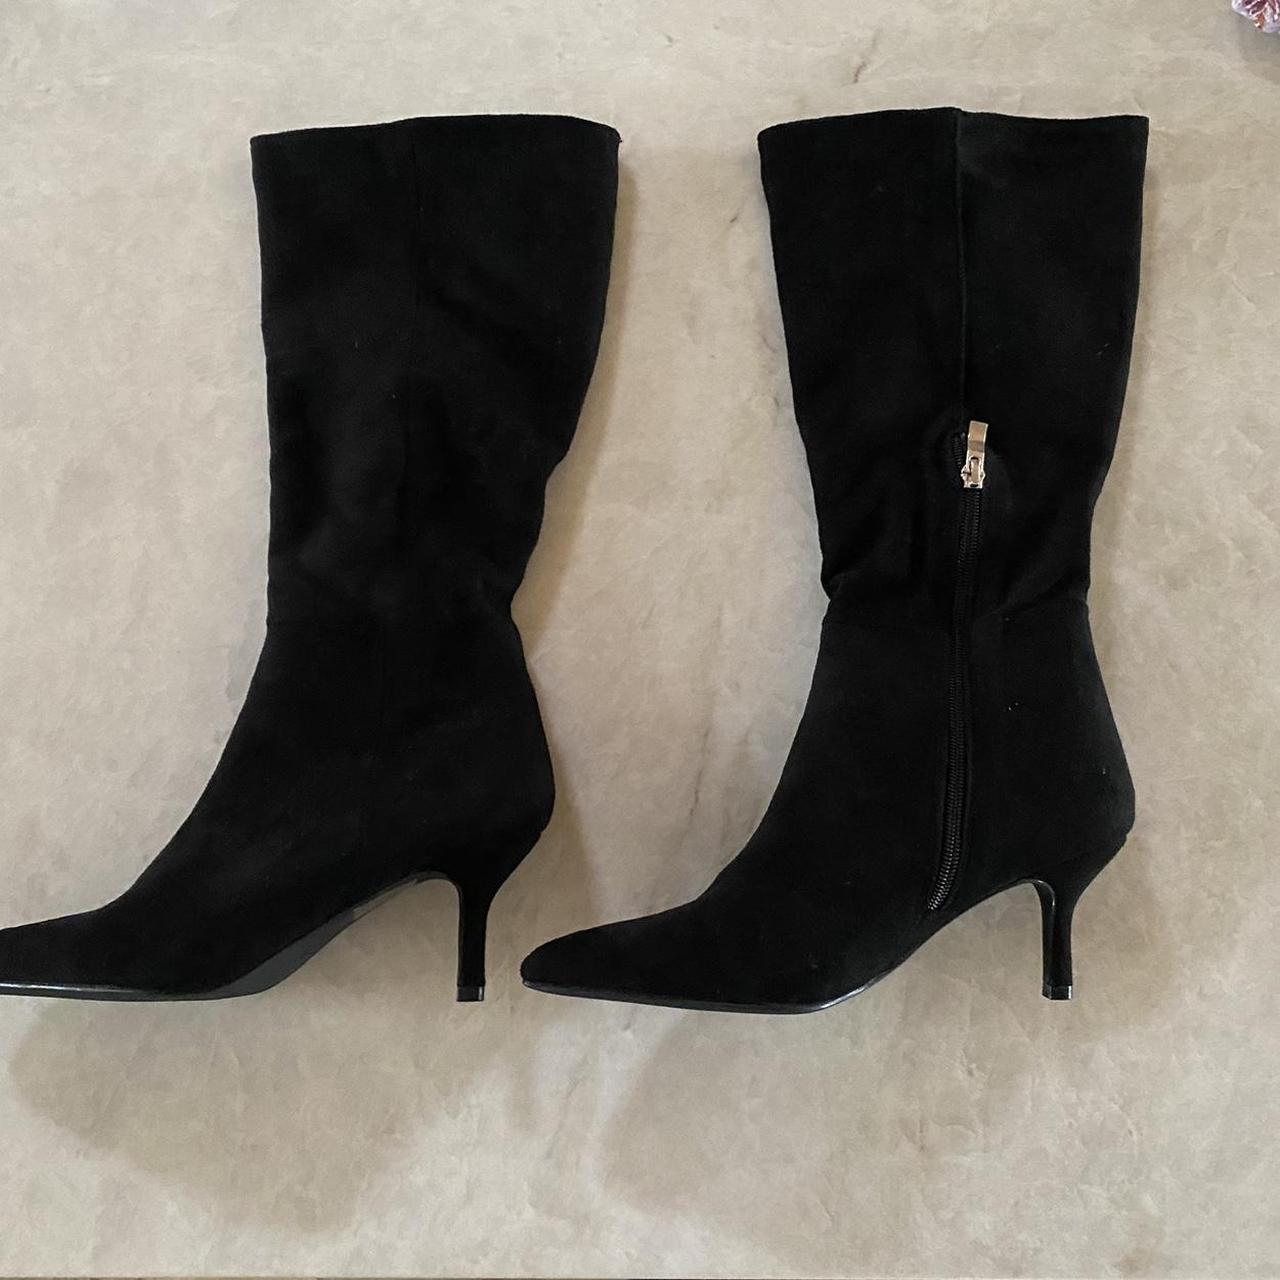 Chic Women's Black Boots